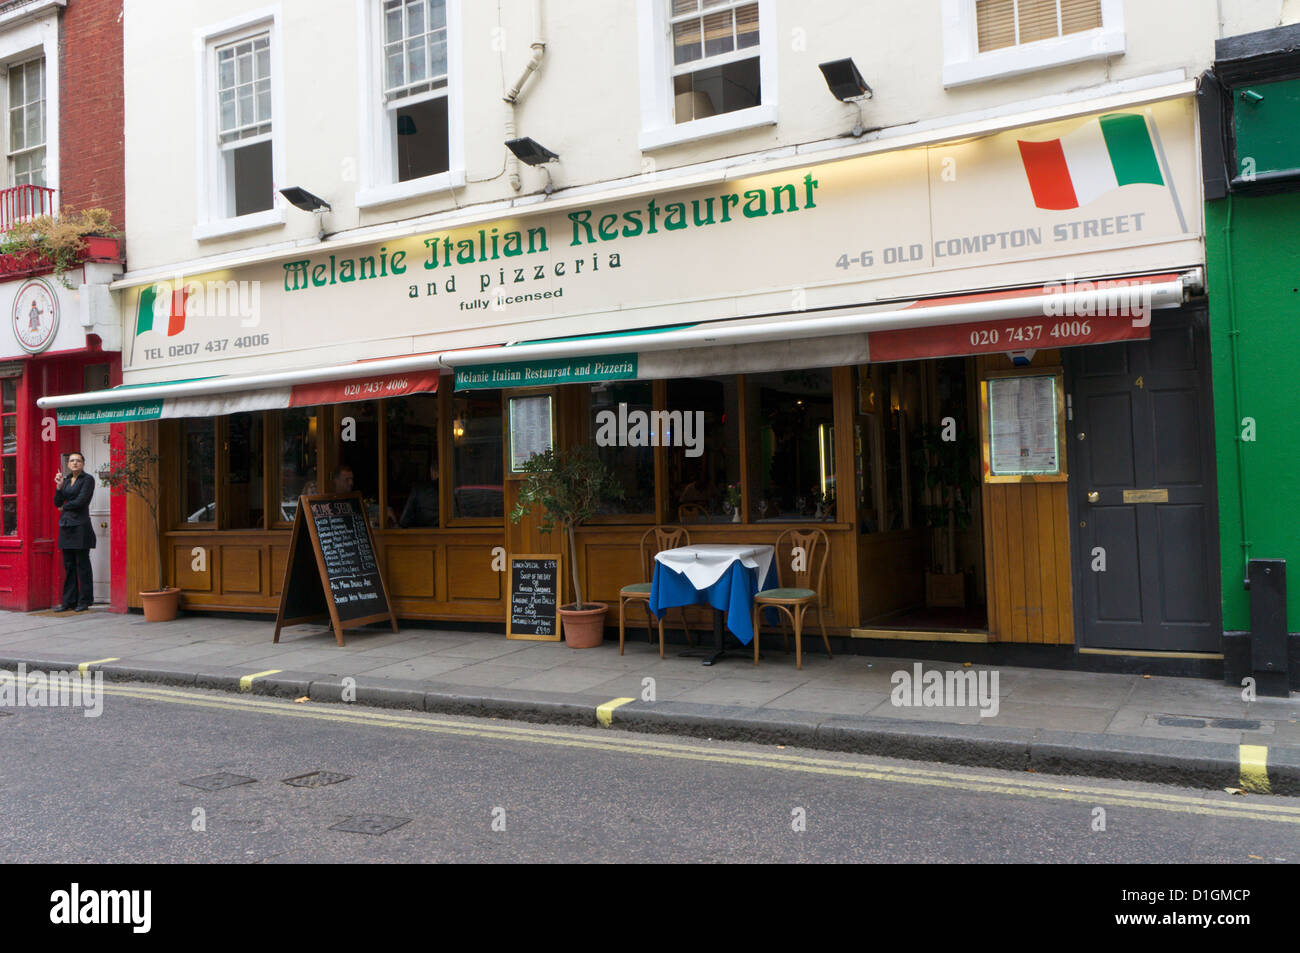 Melanie Italian Restaurant and Pizzeria in Old Compton Street, Soho. Stock Photo